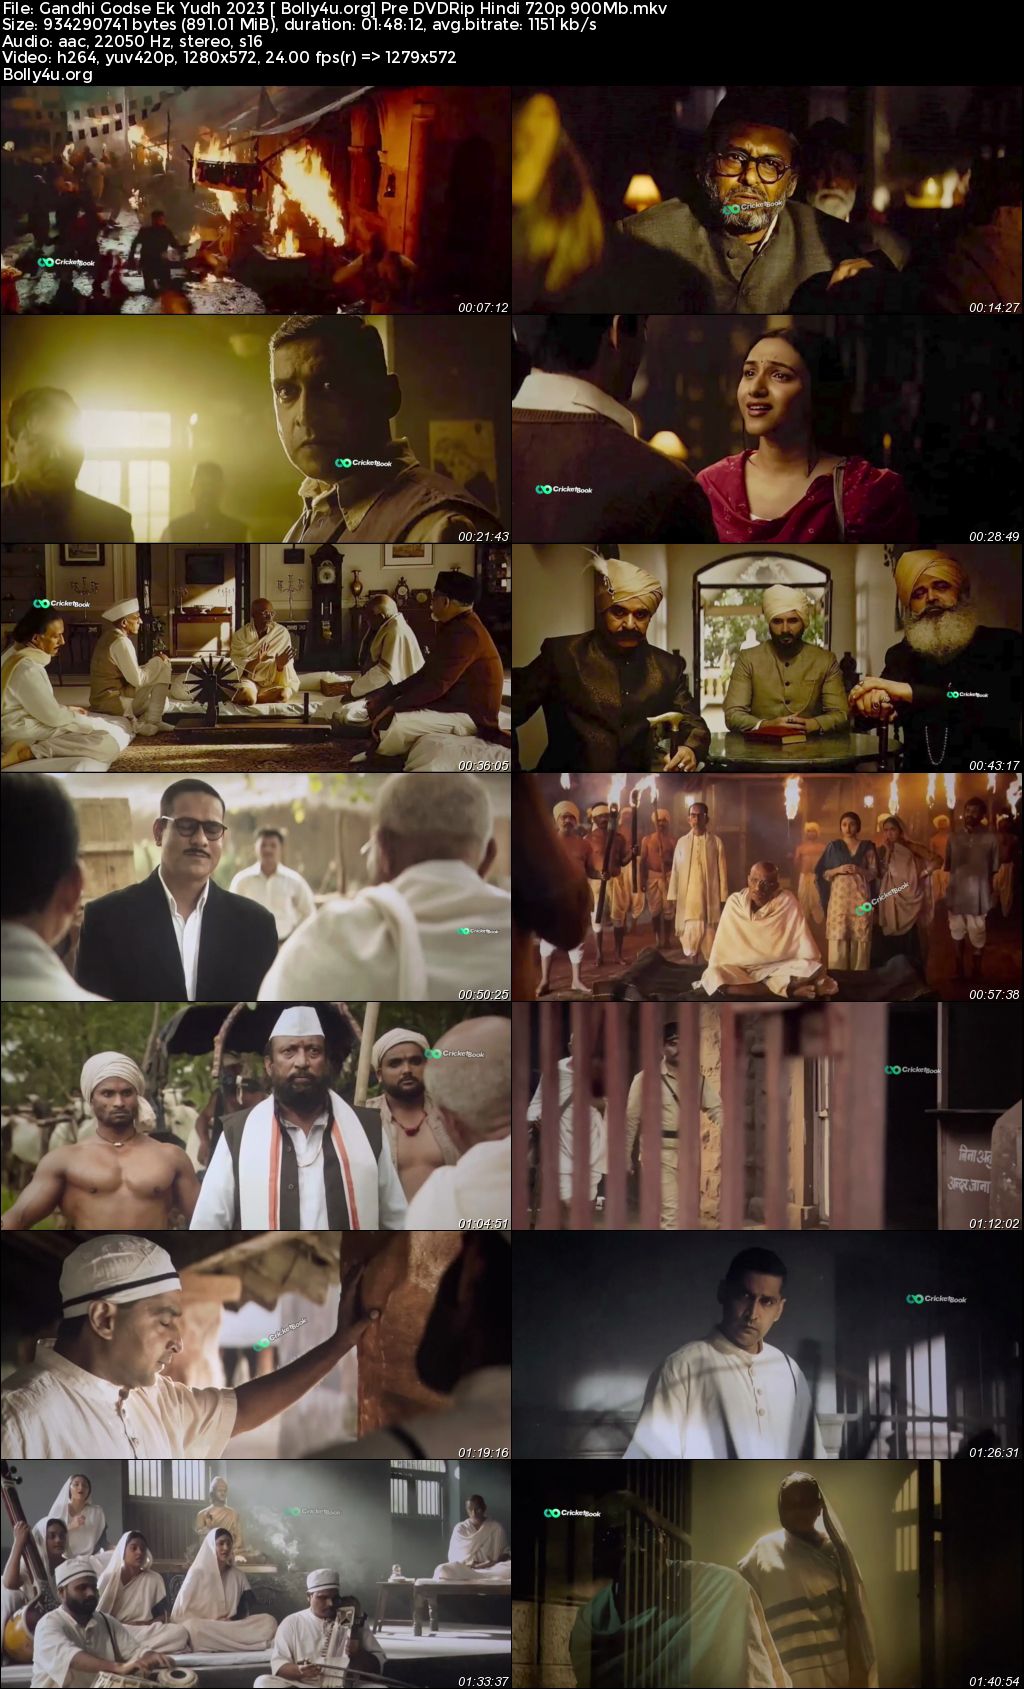 Gandhi Godse Ek Yudh 2023 Pre DVDRip Hindi Full Movie Download 720p 480p